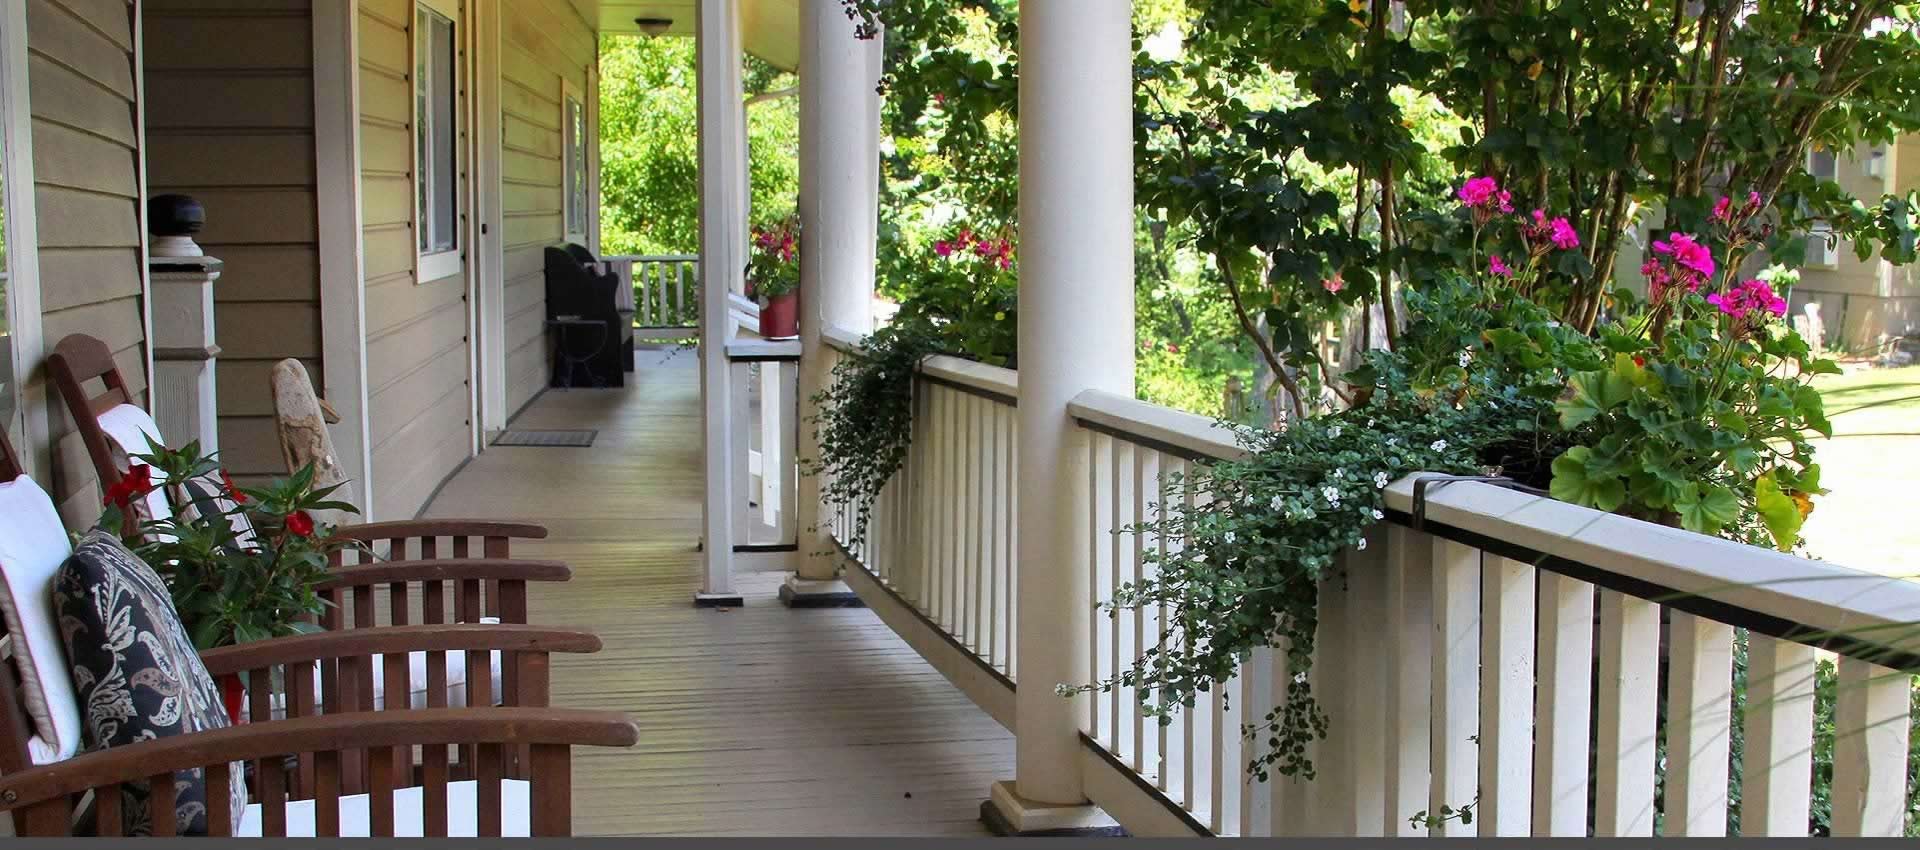 Heartstone-Inn-front-porch